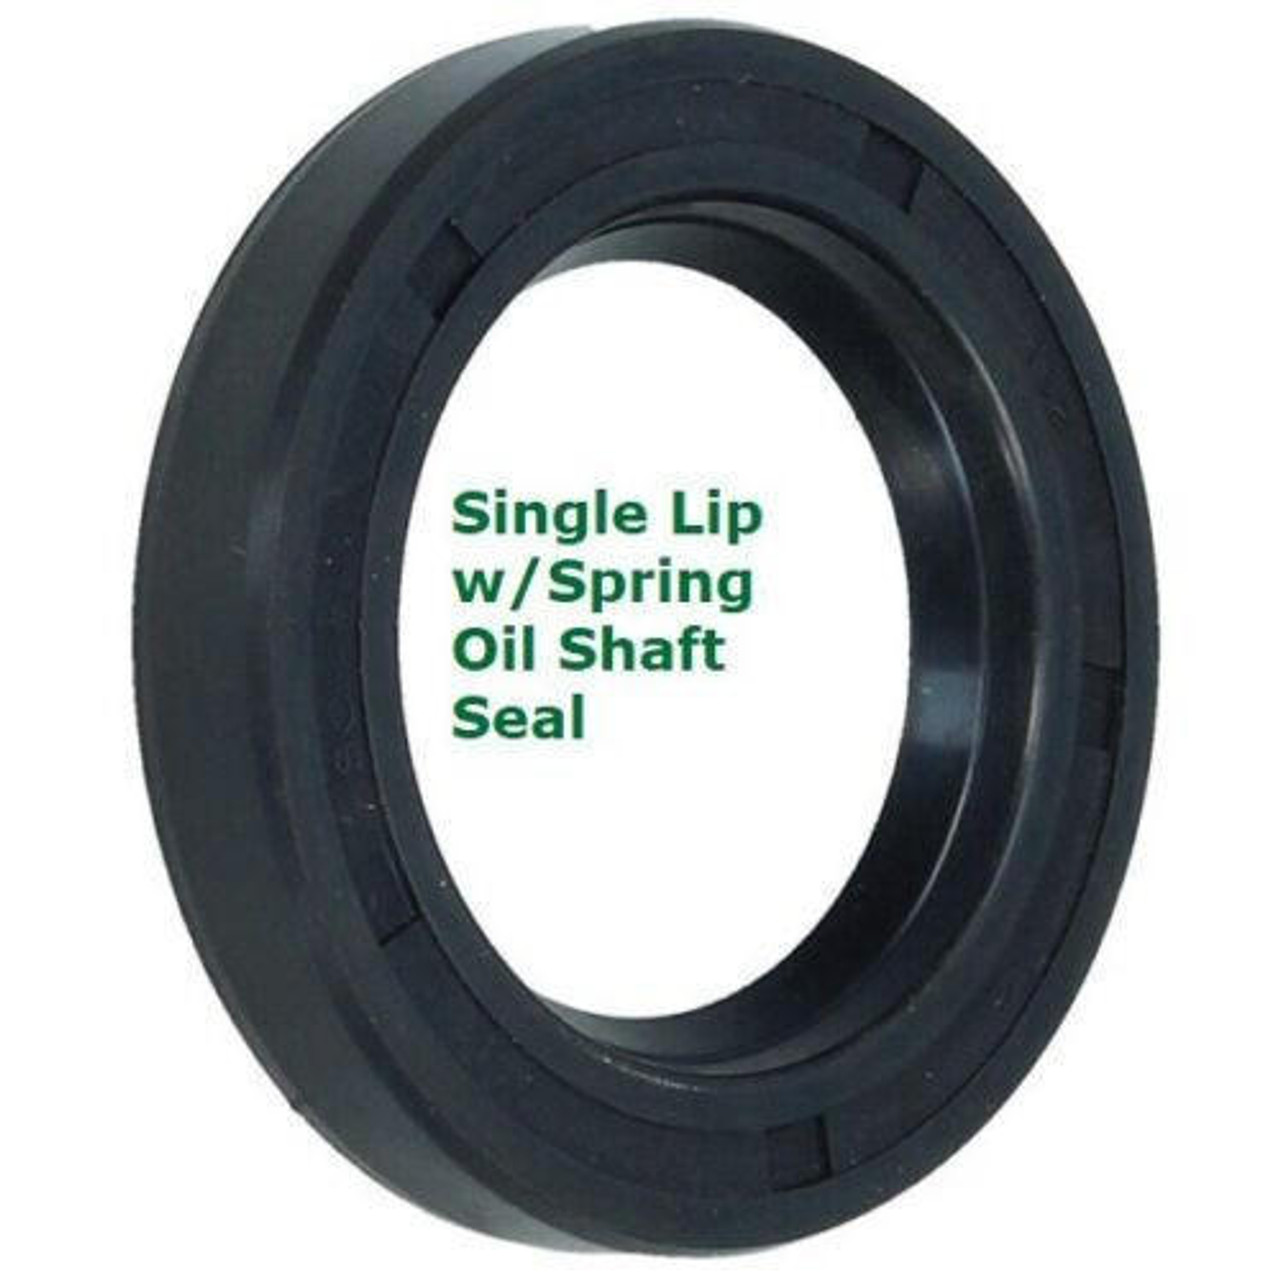 Metric Oil Shaft Seal 110 x 125 x 12mm Single Lip   Price for 1 pc